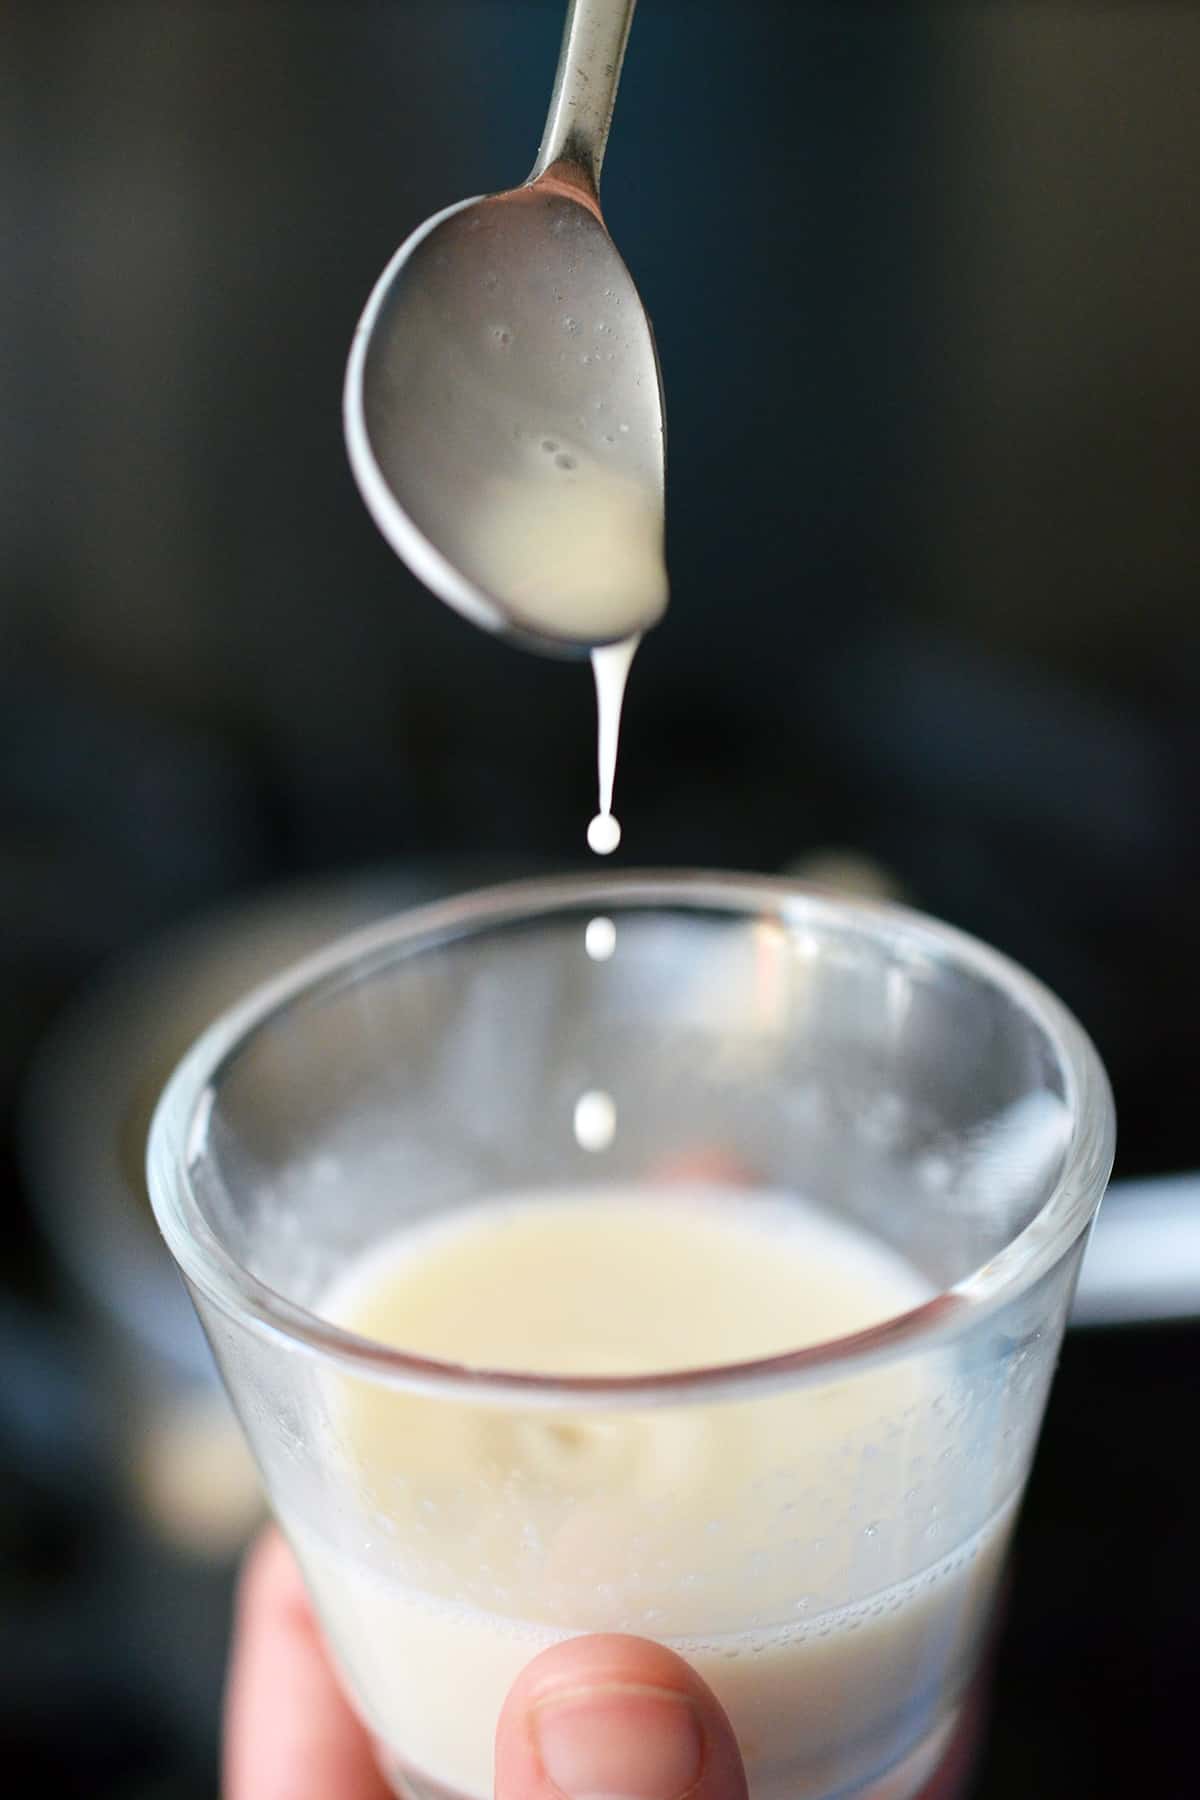 Transferring warmed almond milk into a glass jar with gelatin.